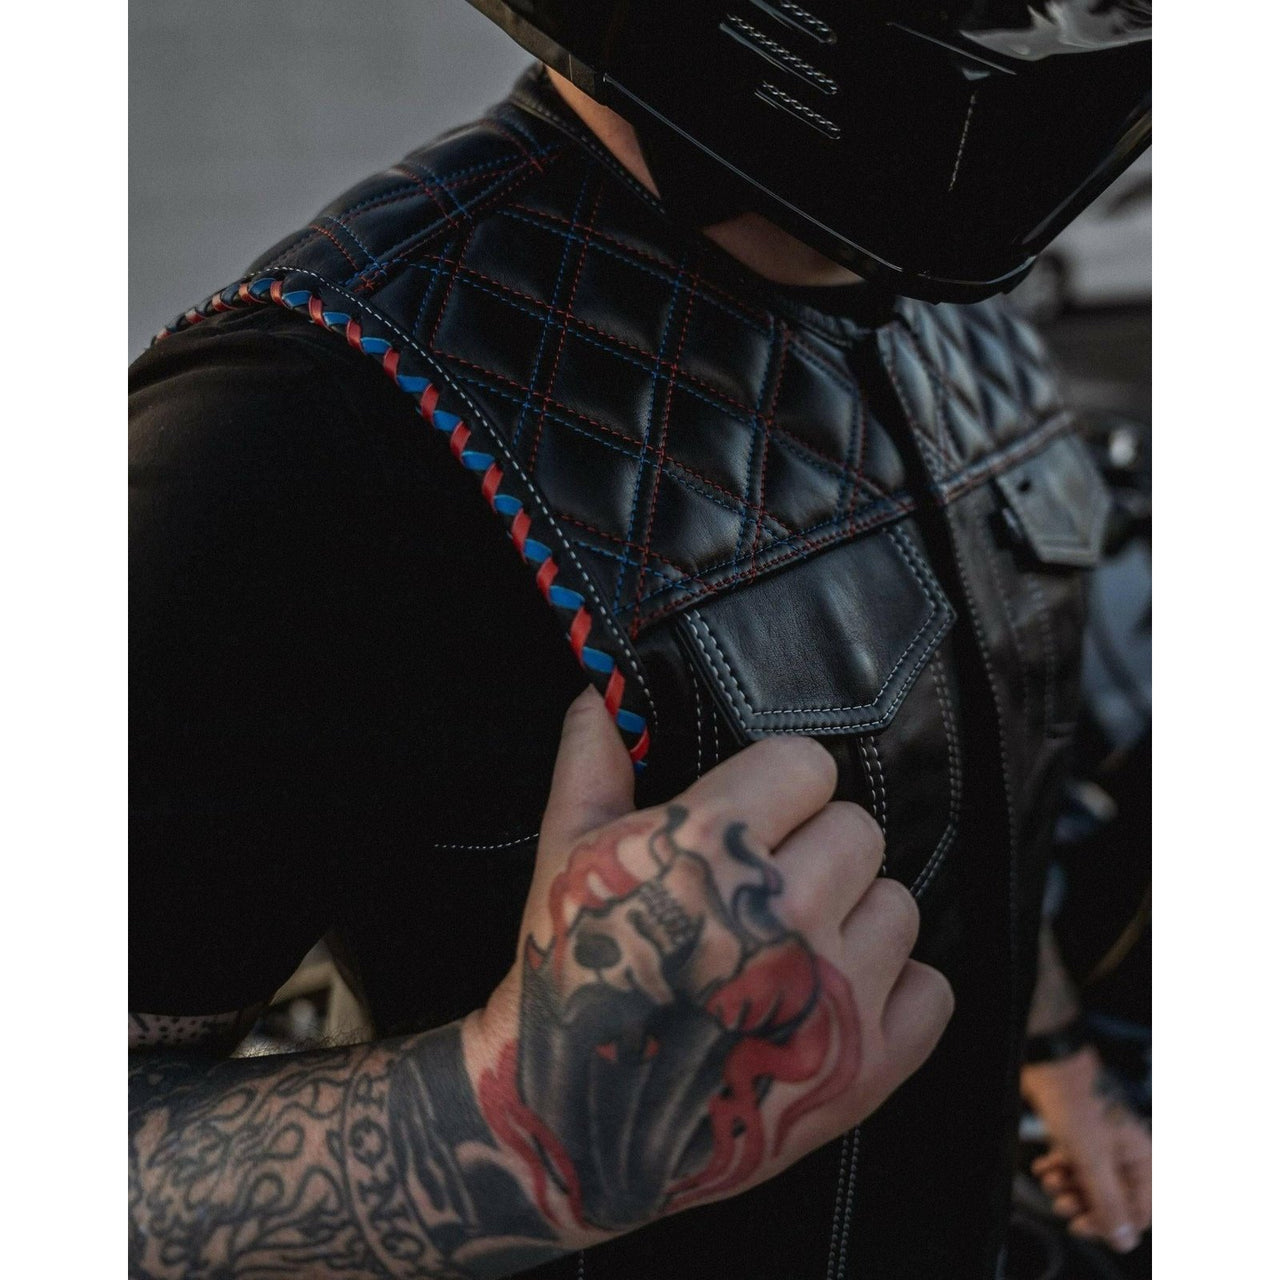 Patriot Black Leather Mens Vest - Rebel Reaper Clothing Company Men's Vest